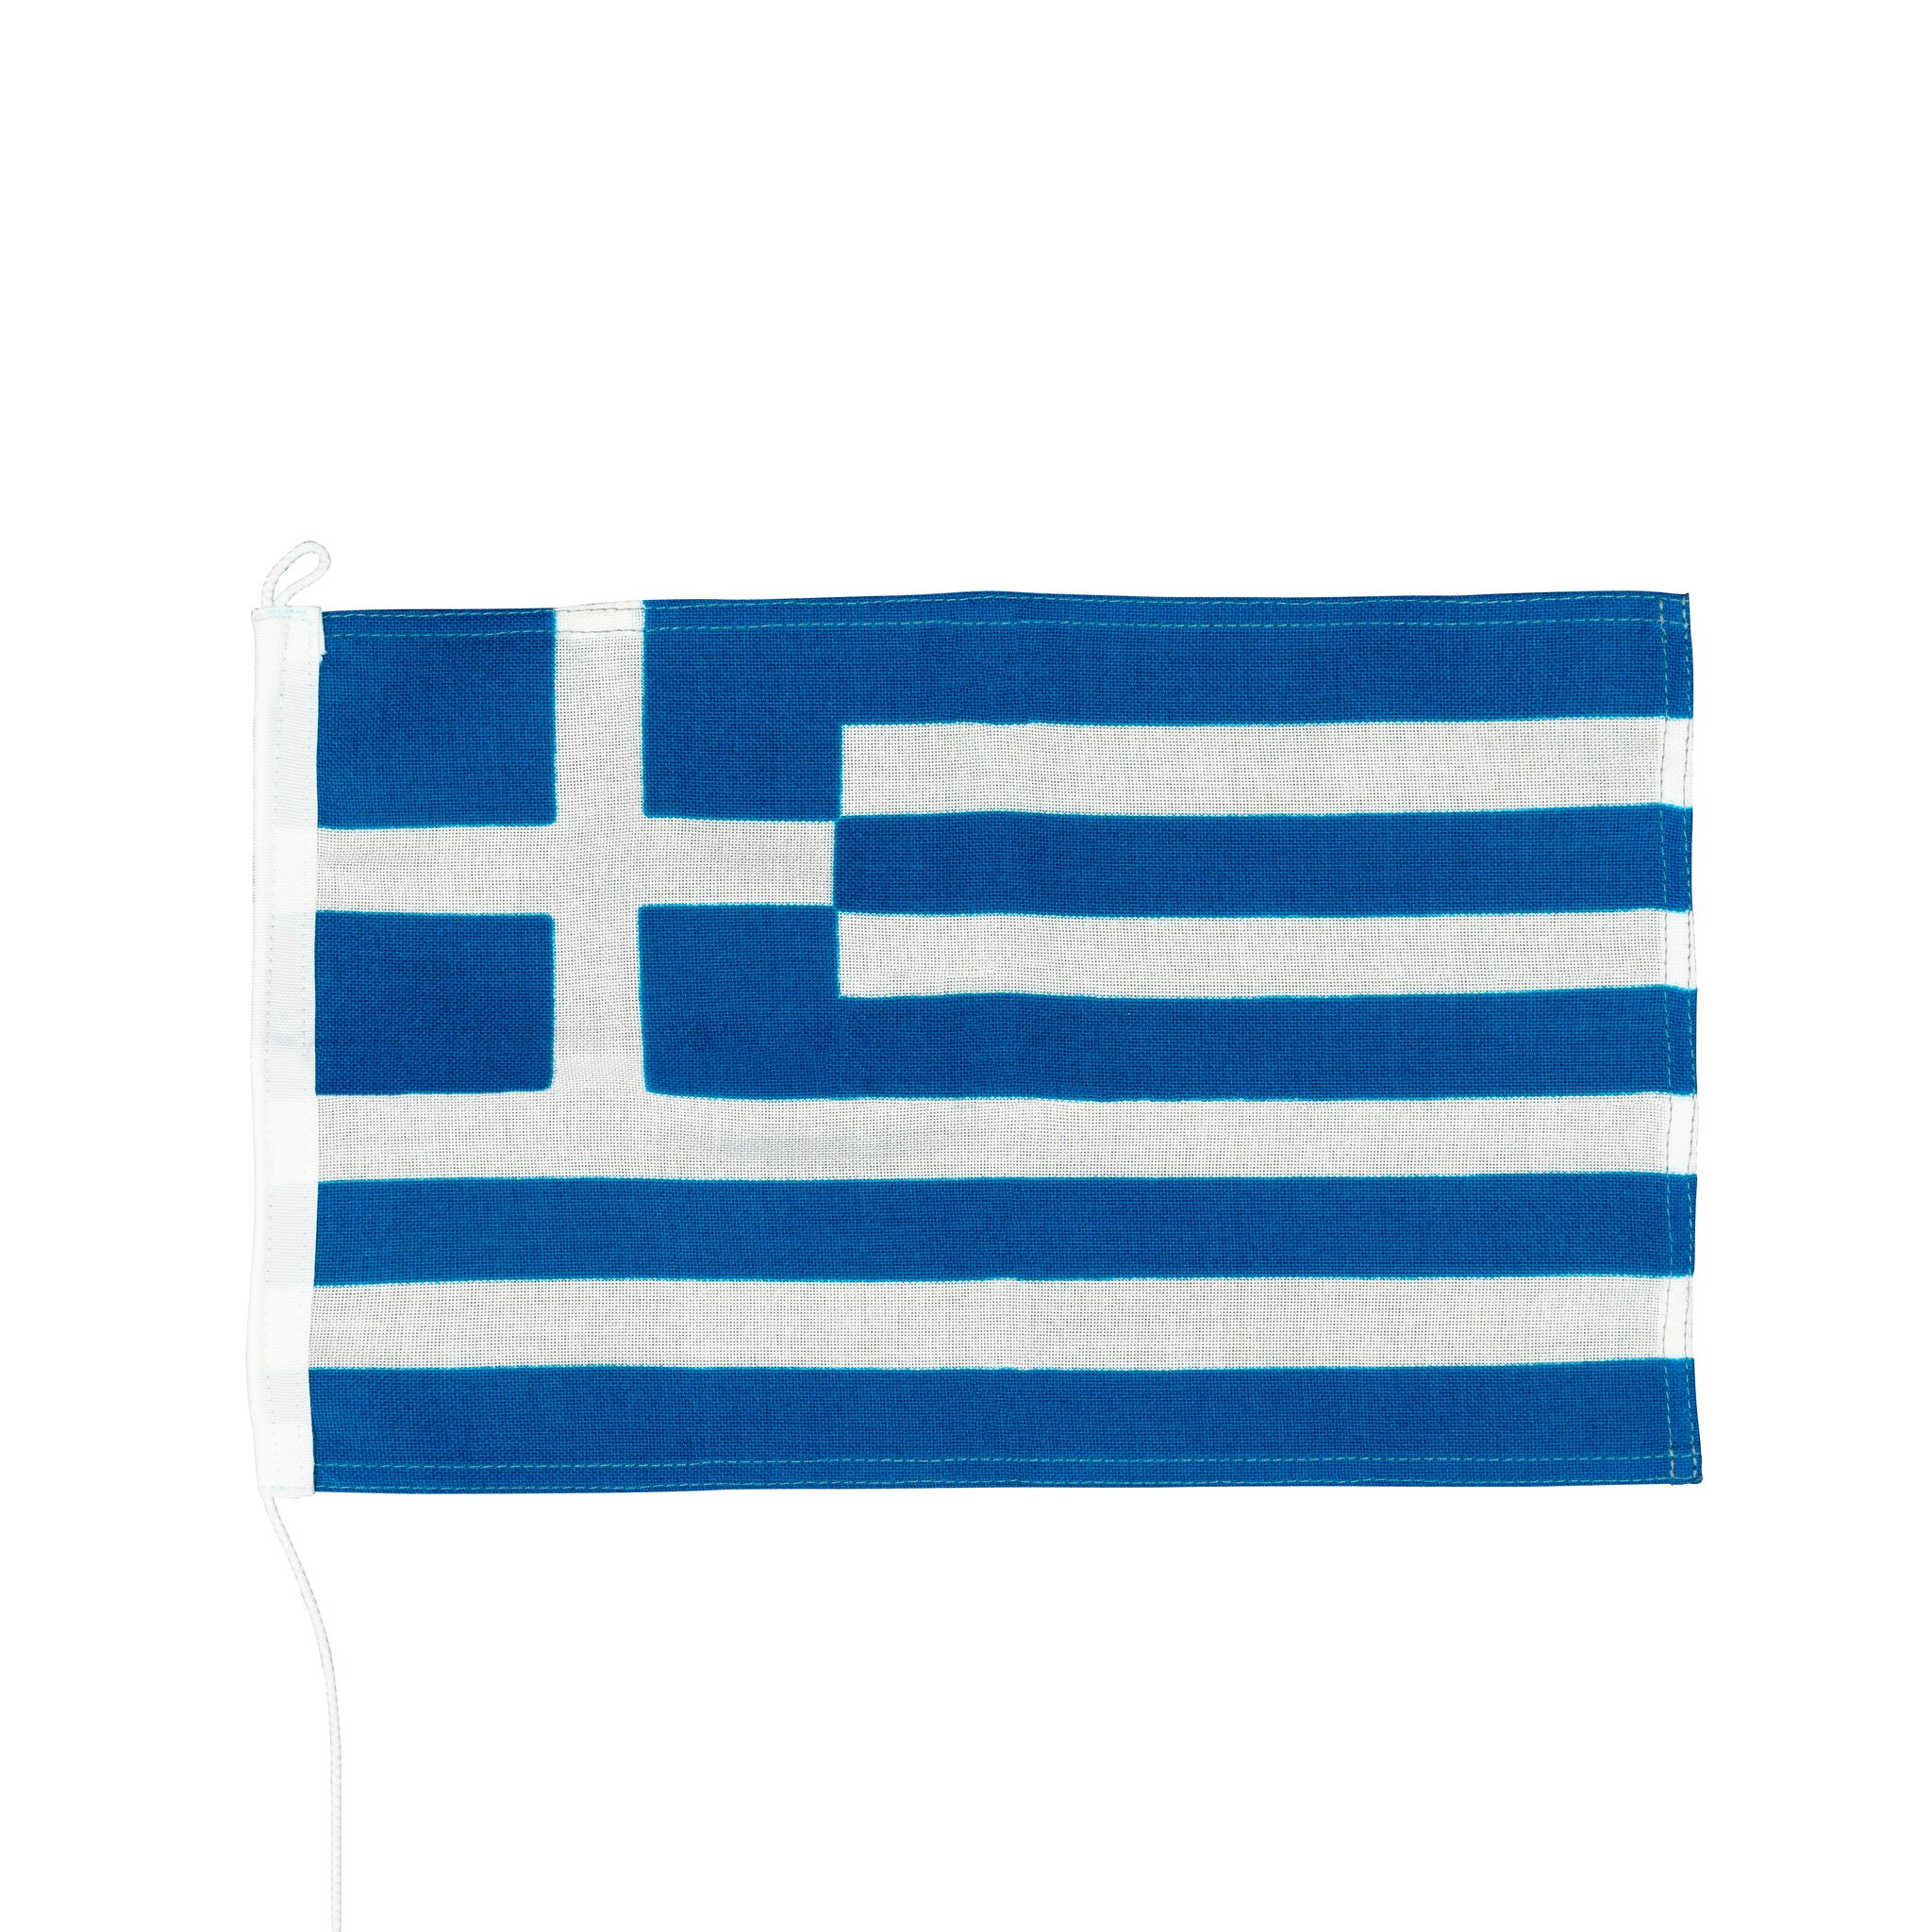 Gastlandflagge Griechenland